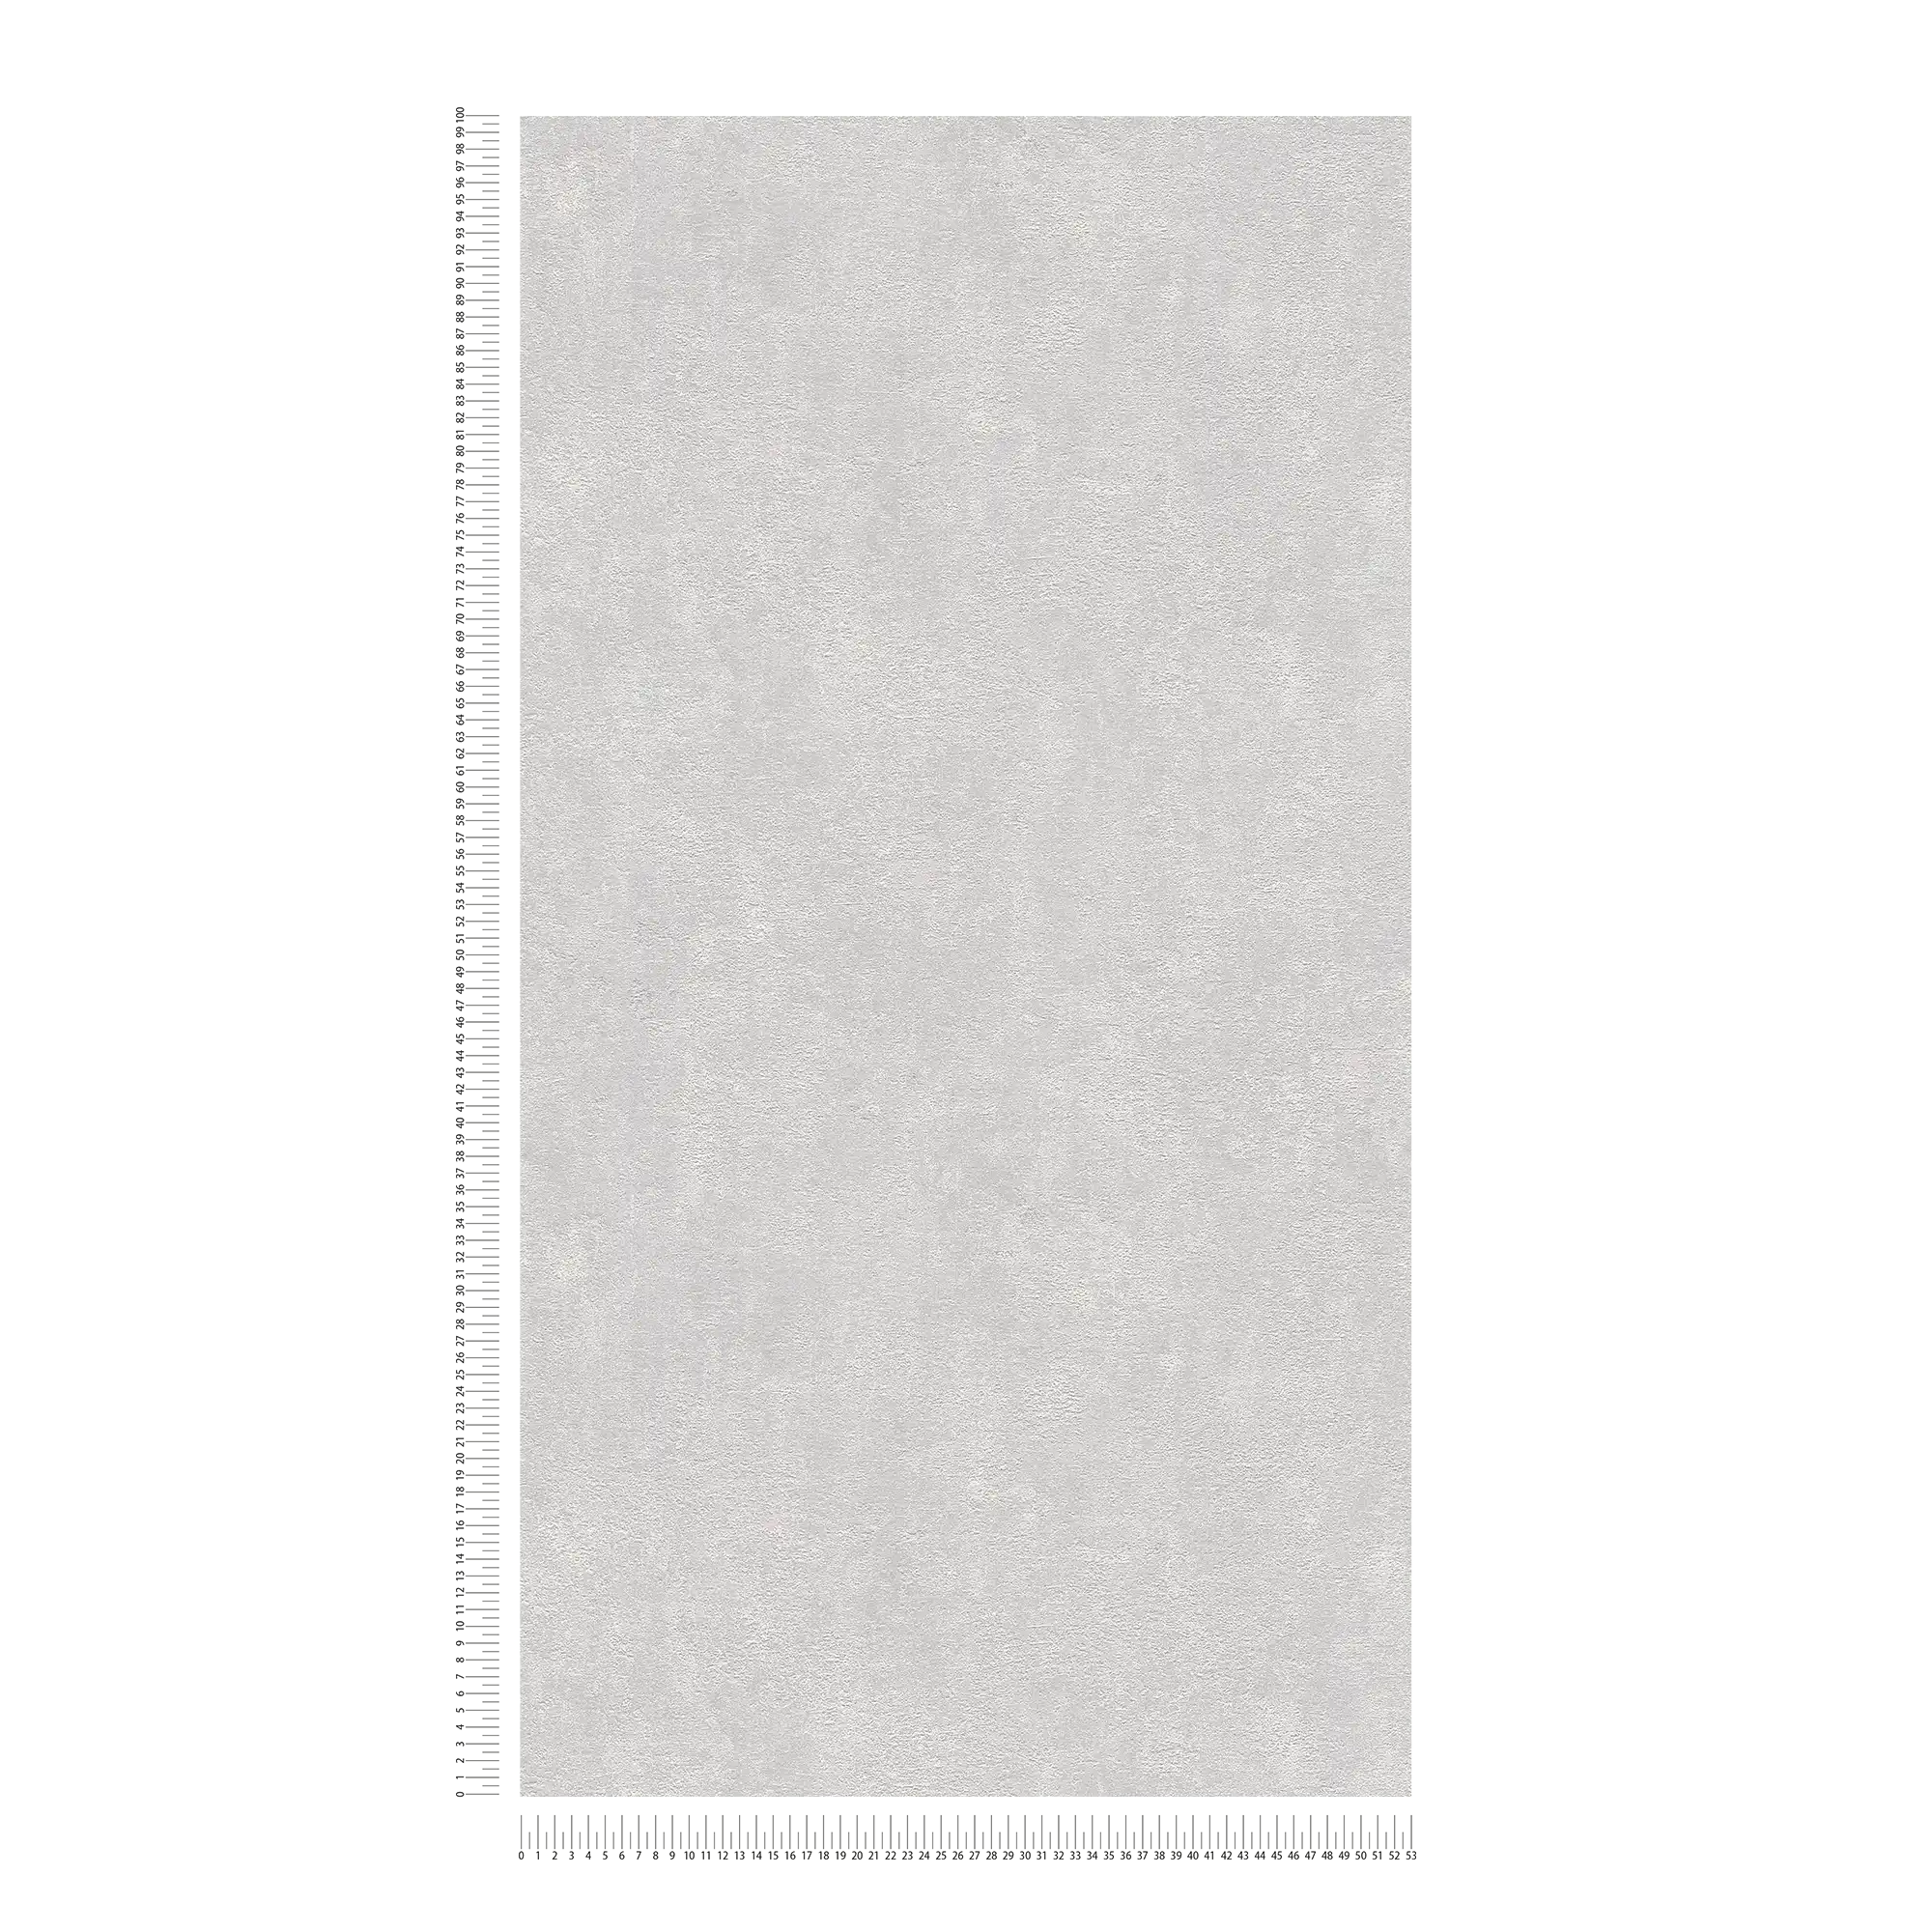             Wallpaper plaster structure, plain & satin - light grey
        